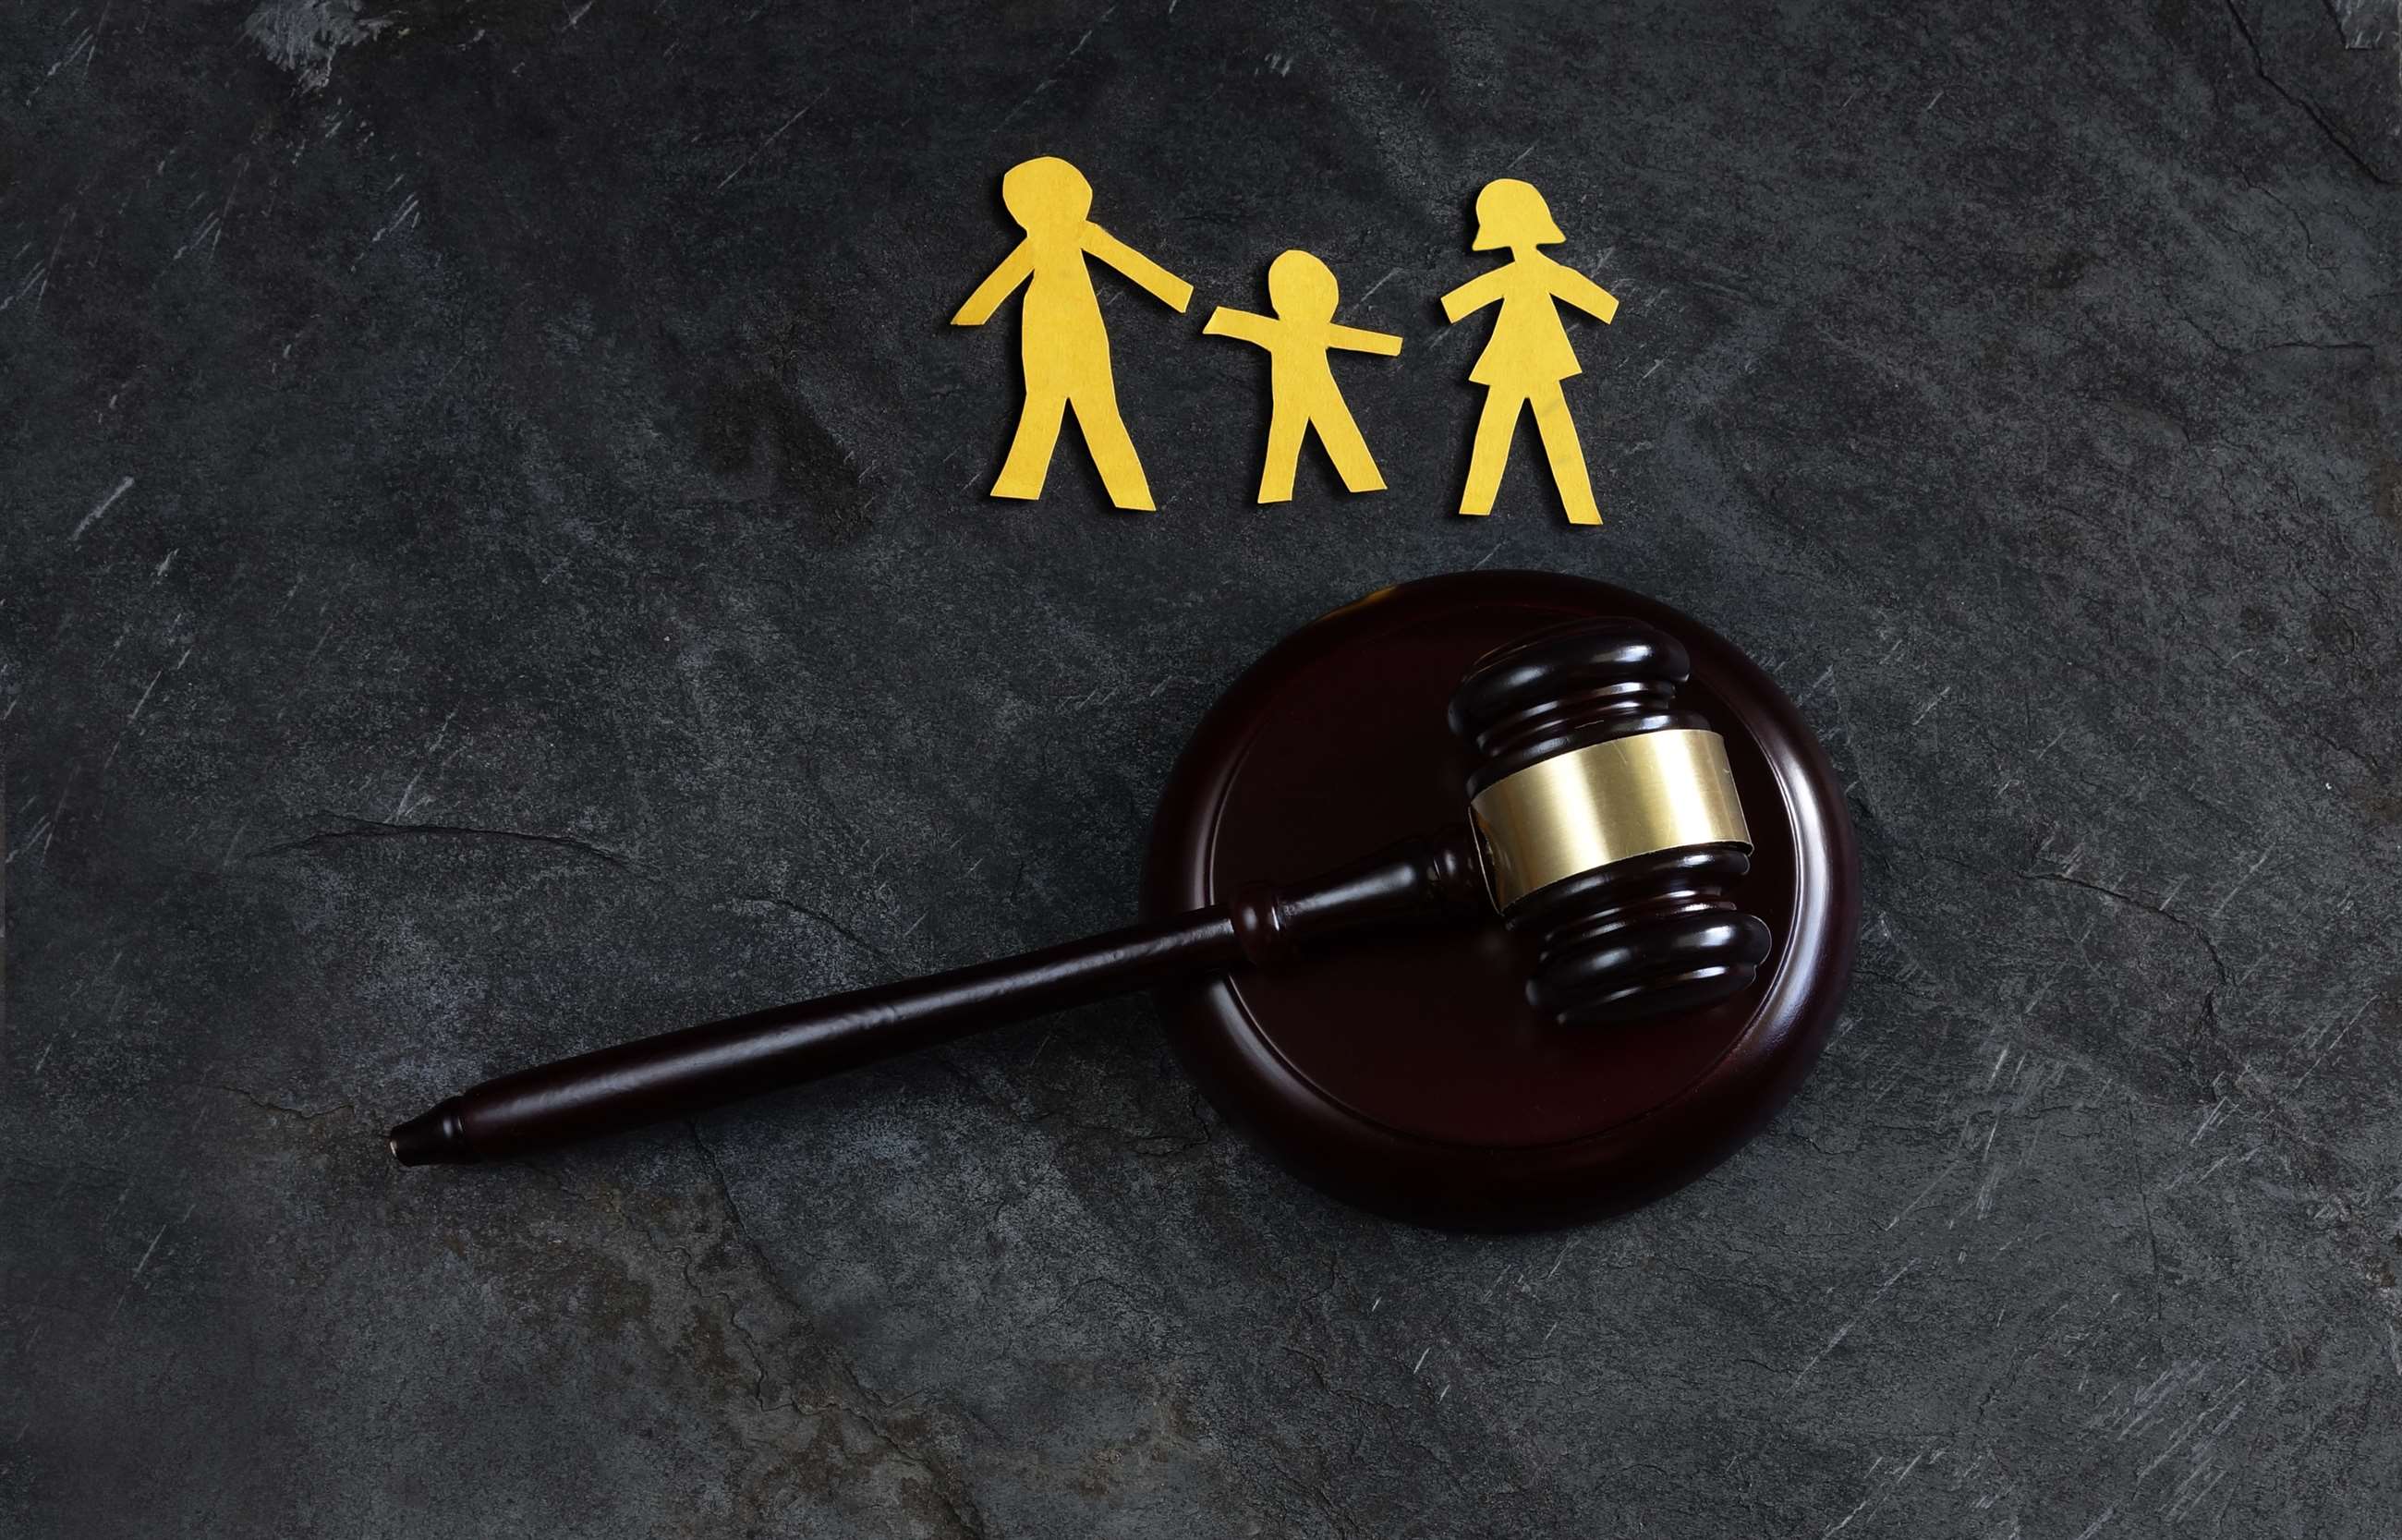 Skilsmisseadvokat med fokus på hele familien